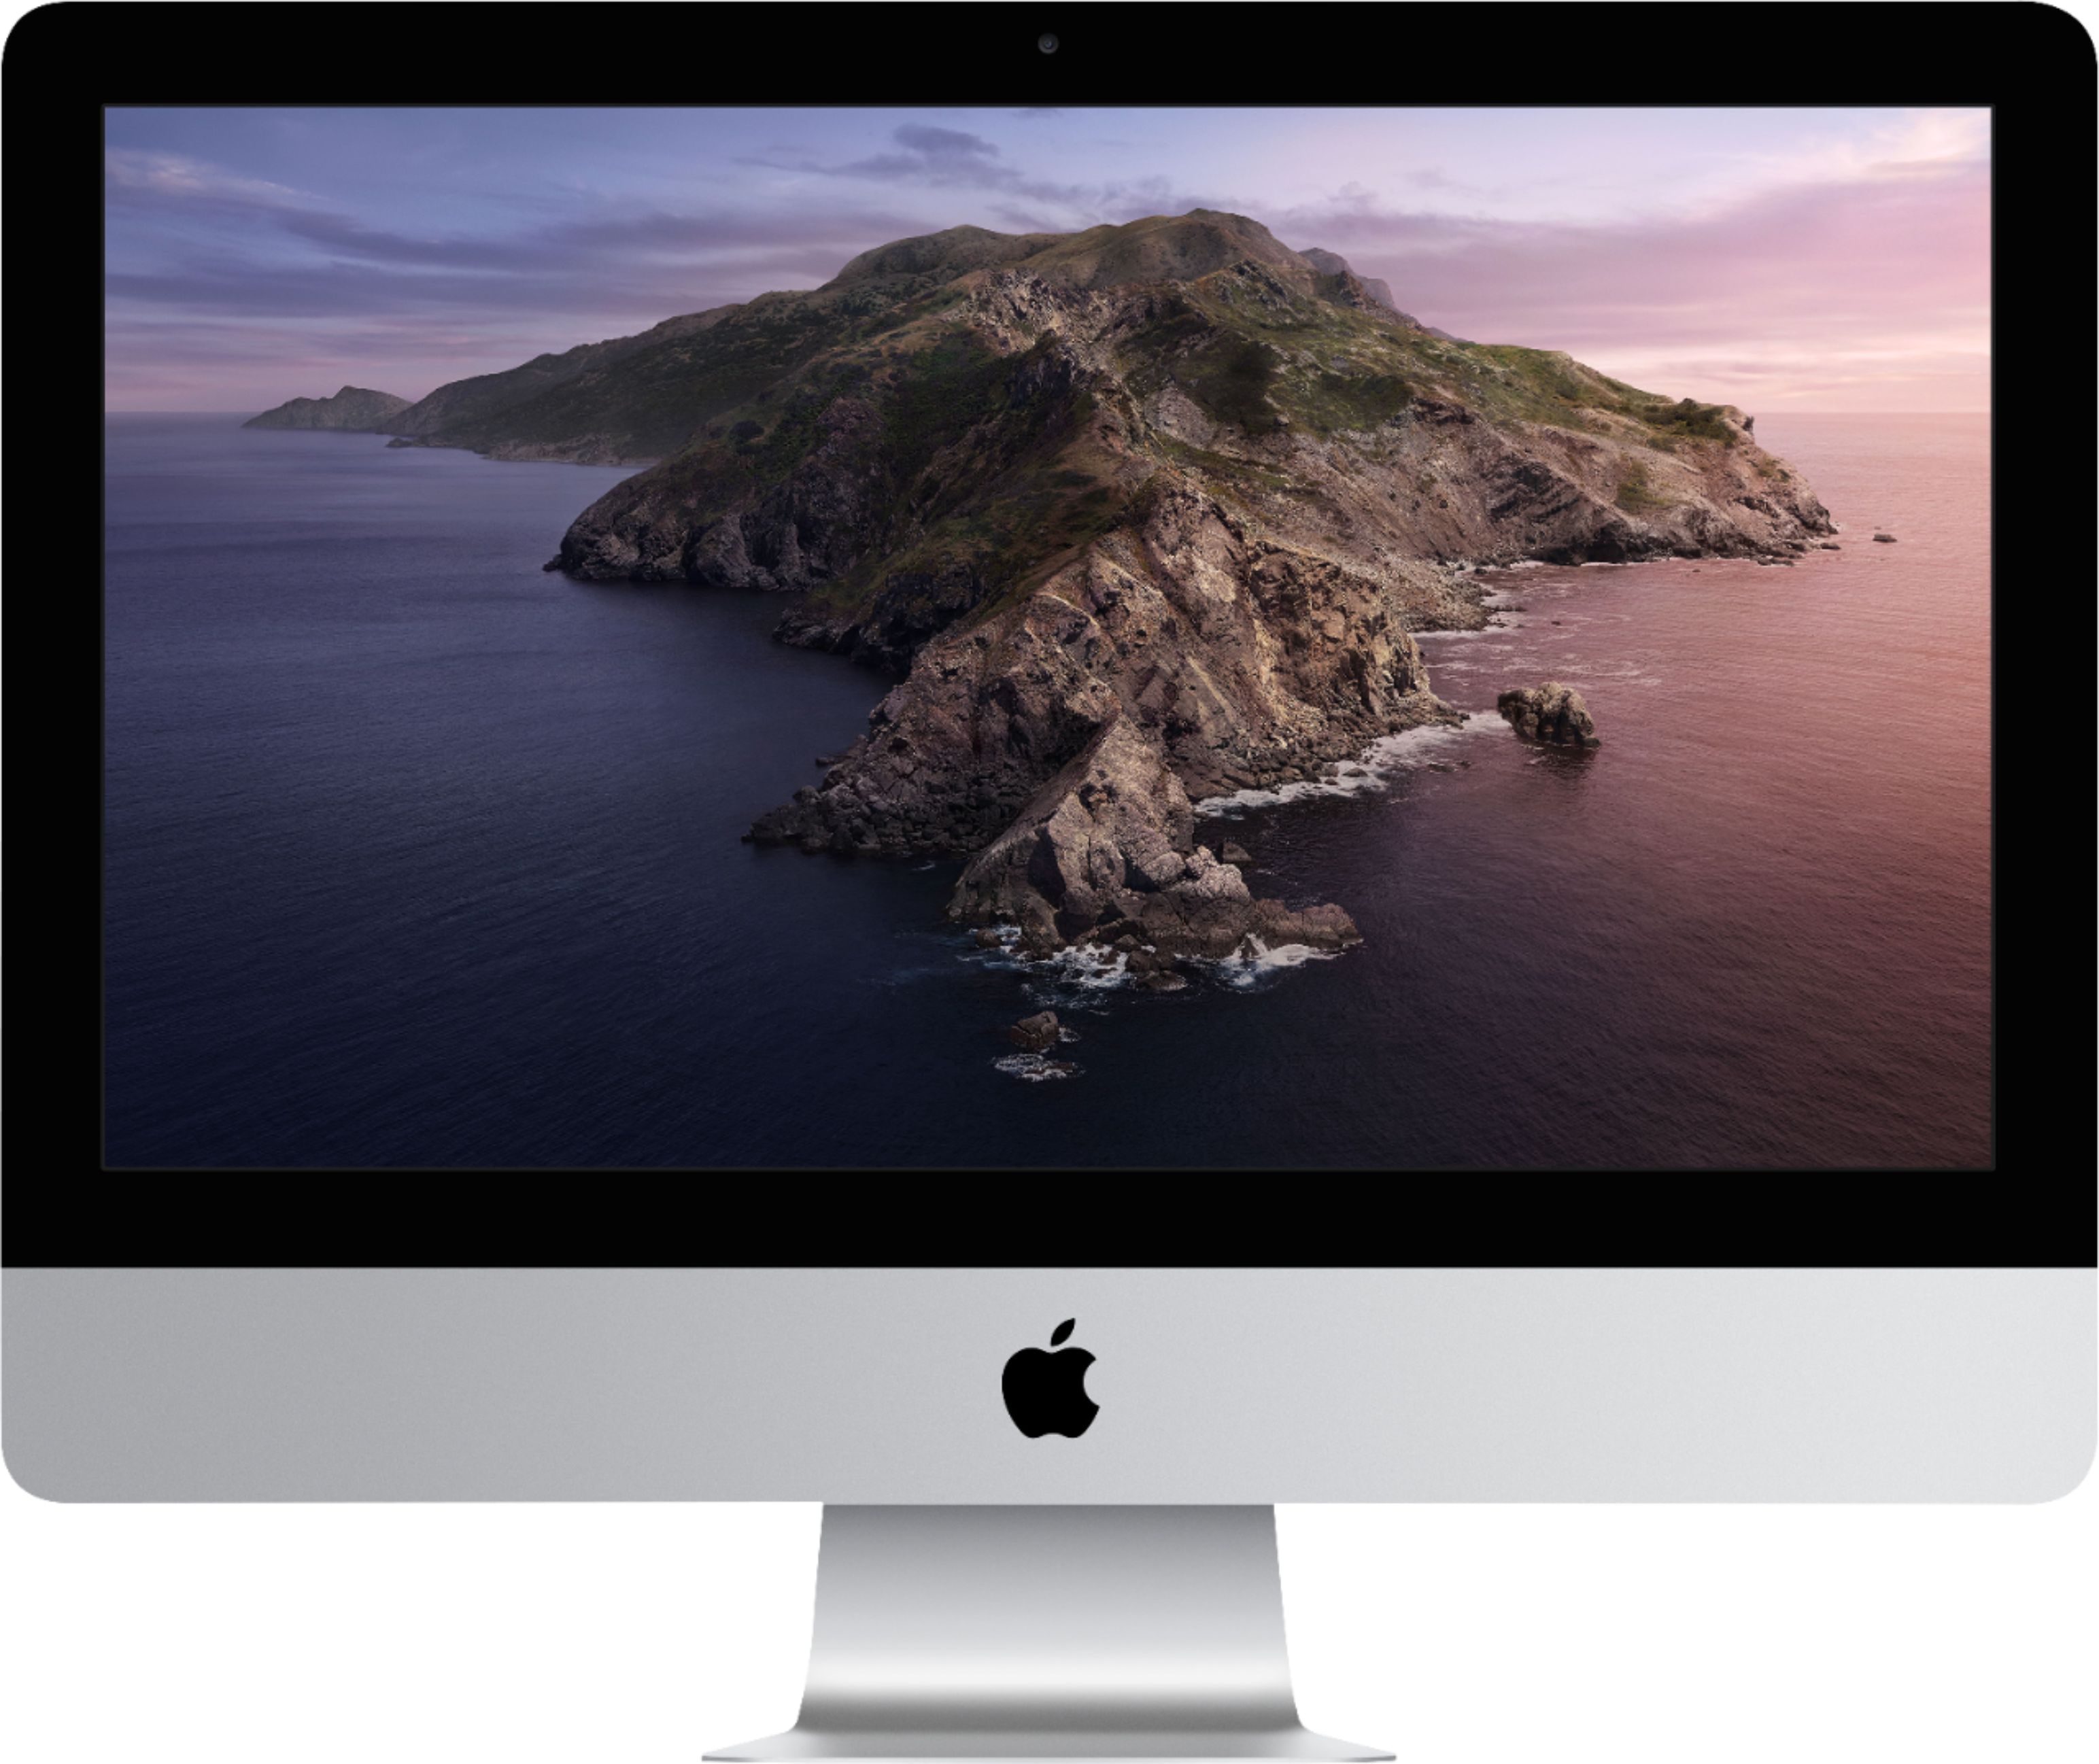 Restored Apple iMac 21.5inch Desktop Computer AllinOne MRT32LL/A, 3.6GHz Intel Core i3, 8GB RAM 1TB HDD, Silver (Refurbished) - image 1 of 5